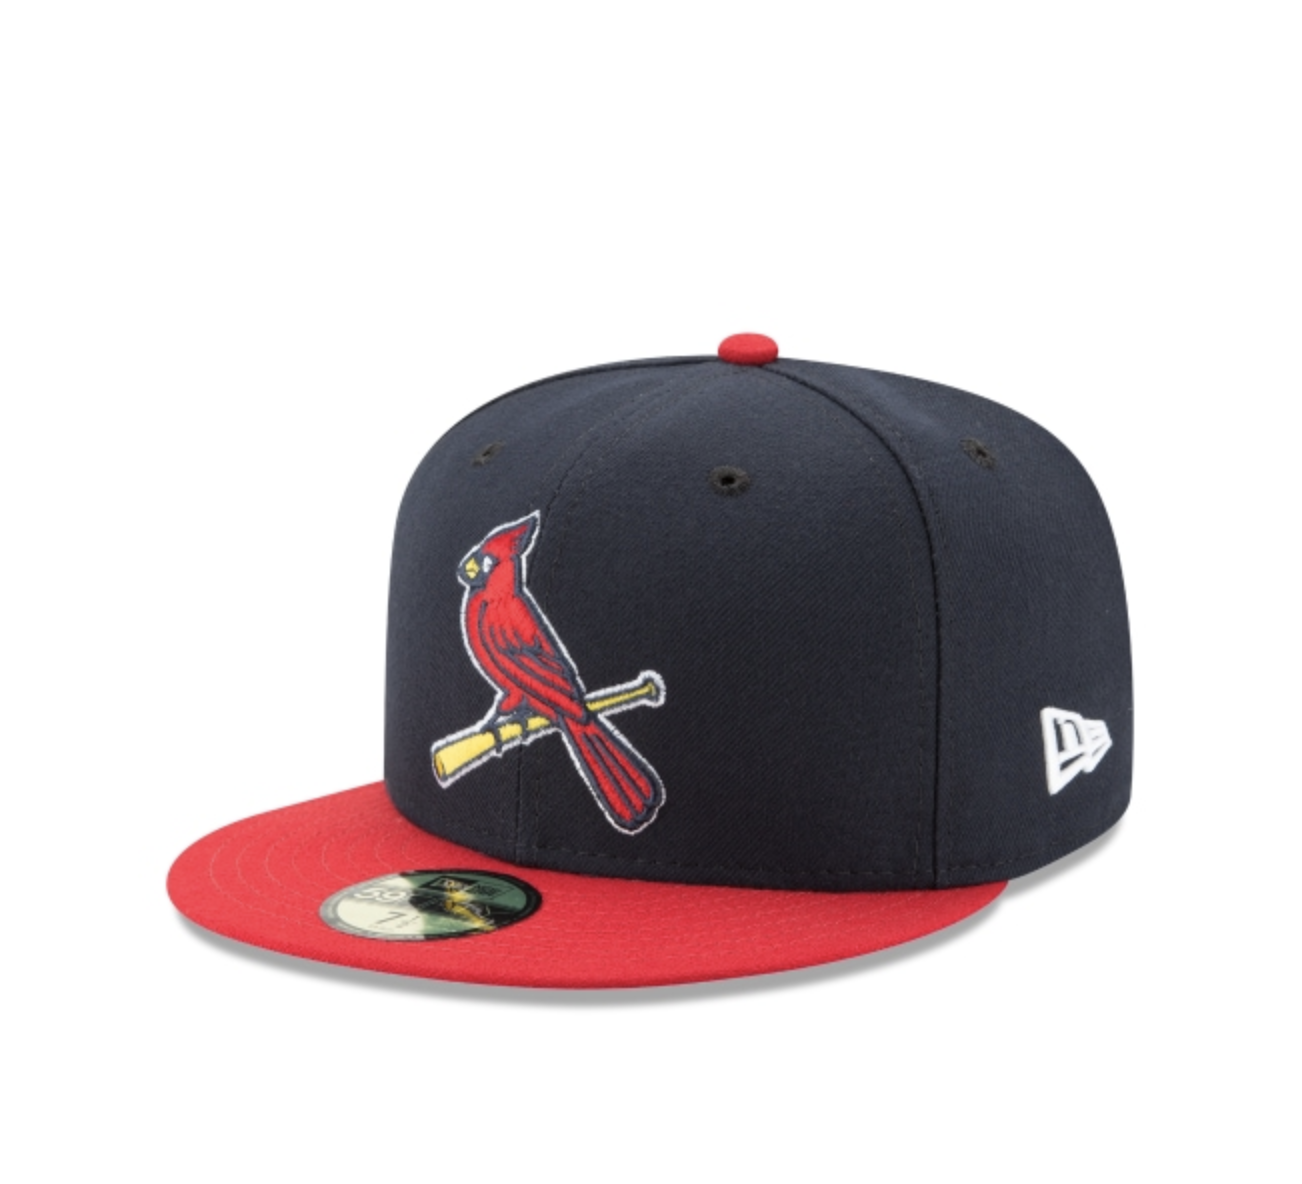 St. Louis Cardinals Hats in St. Louis Cardinals Team Shop 